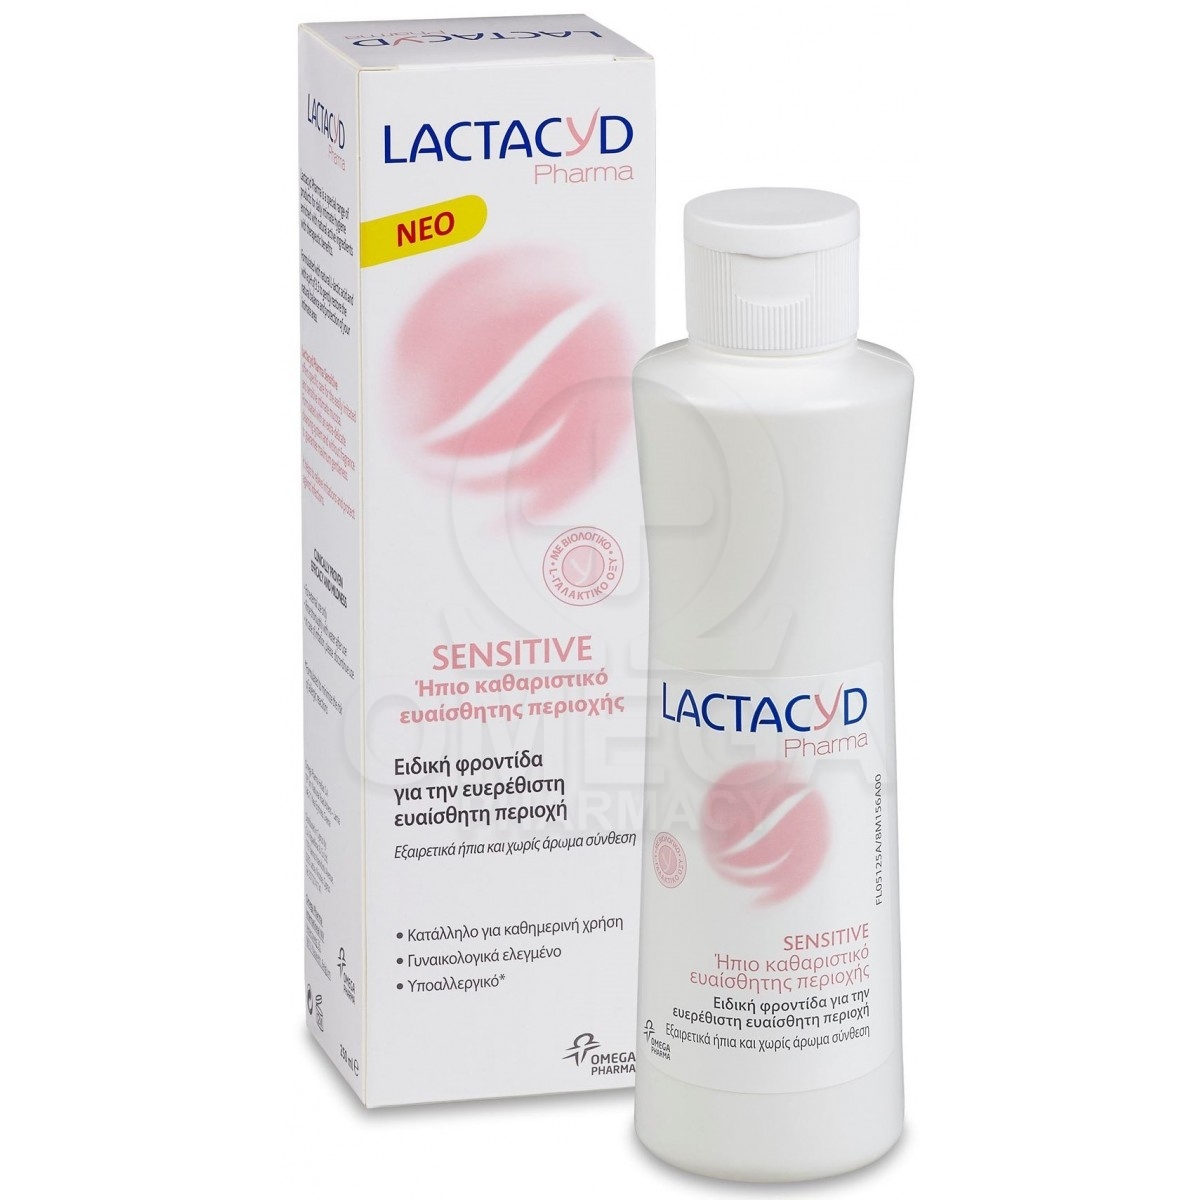 LACTACYD Pharma Sensitive Intimate Wash Ήπιο Καθαριστικό Ευαίσθητης  Περιοχής για Ευαίσθητες Επιδερμίδες 250ml